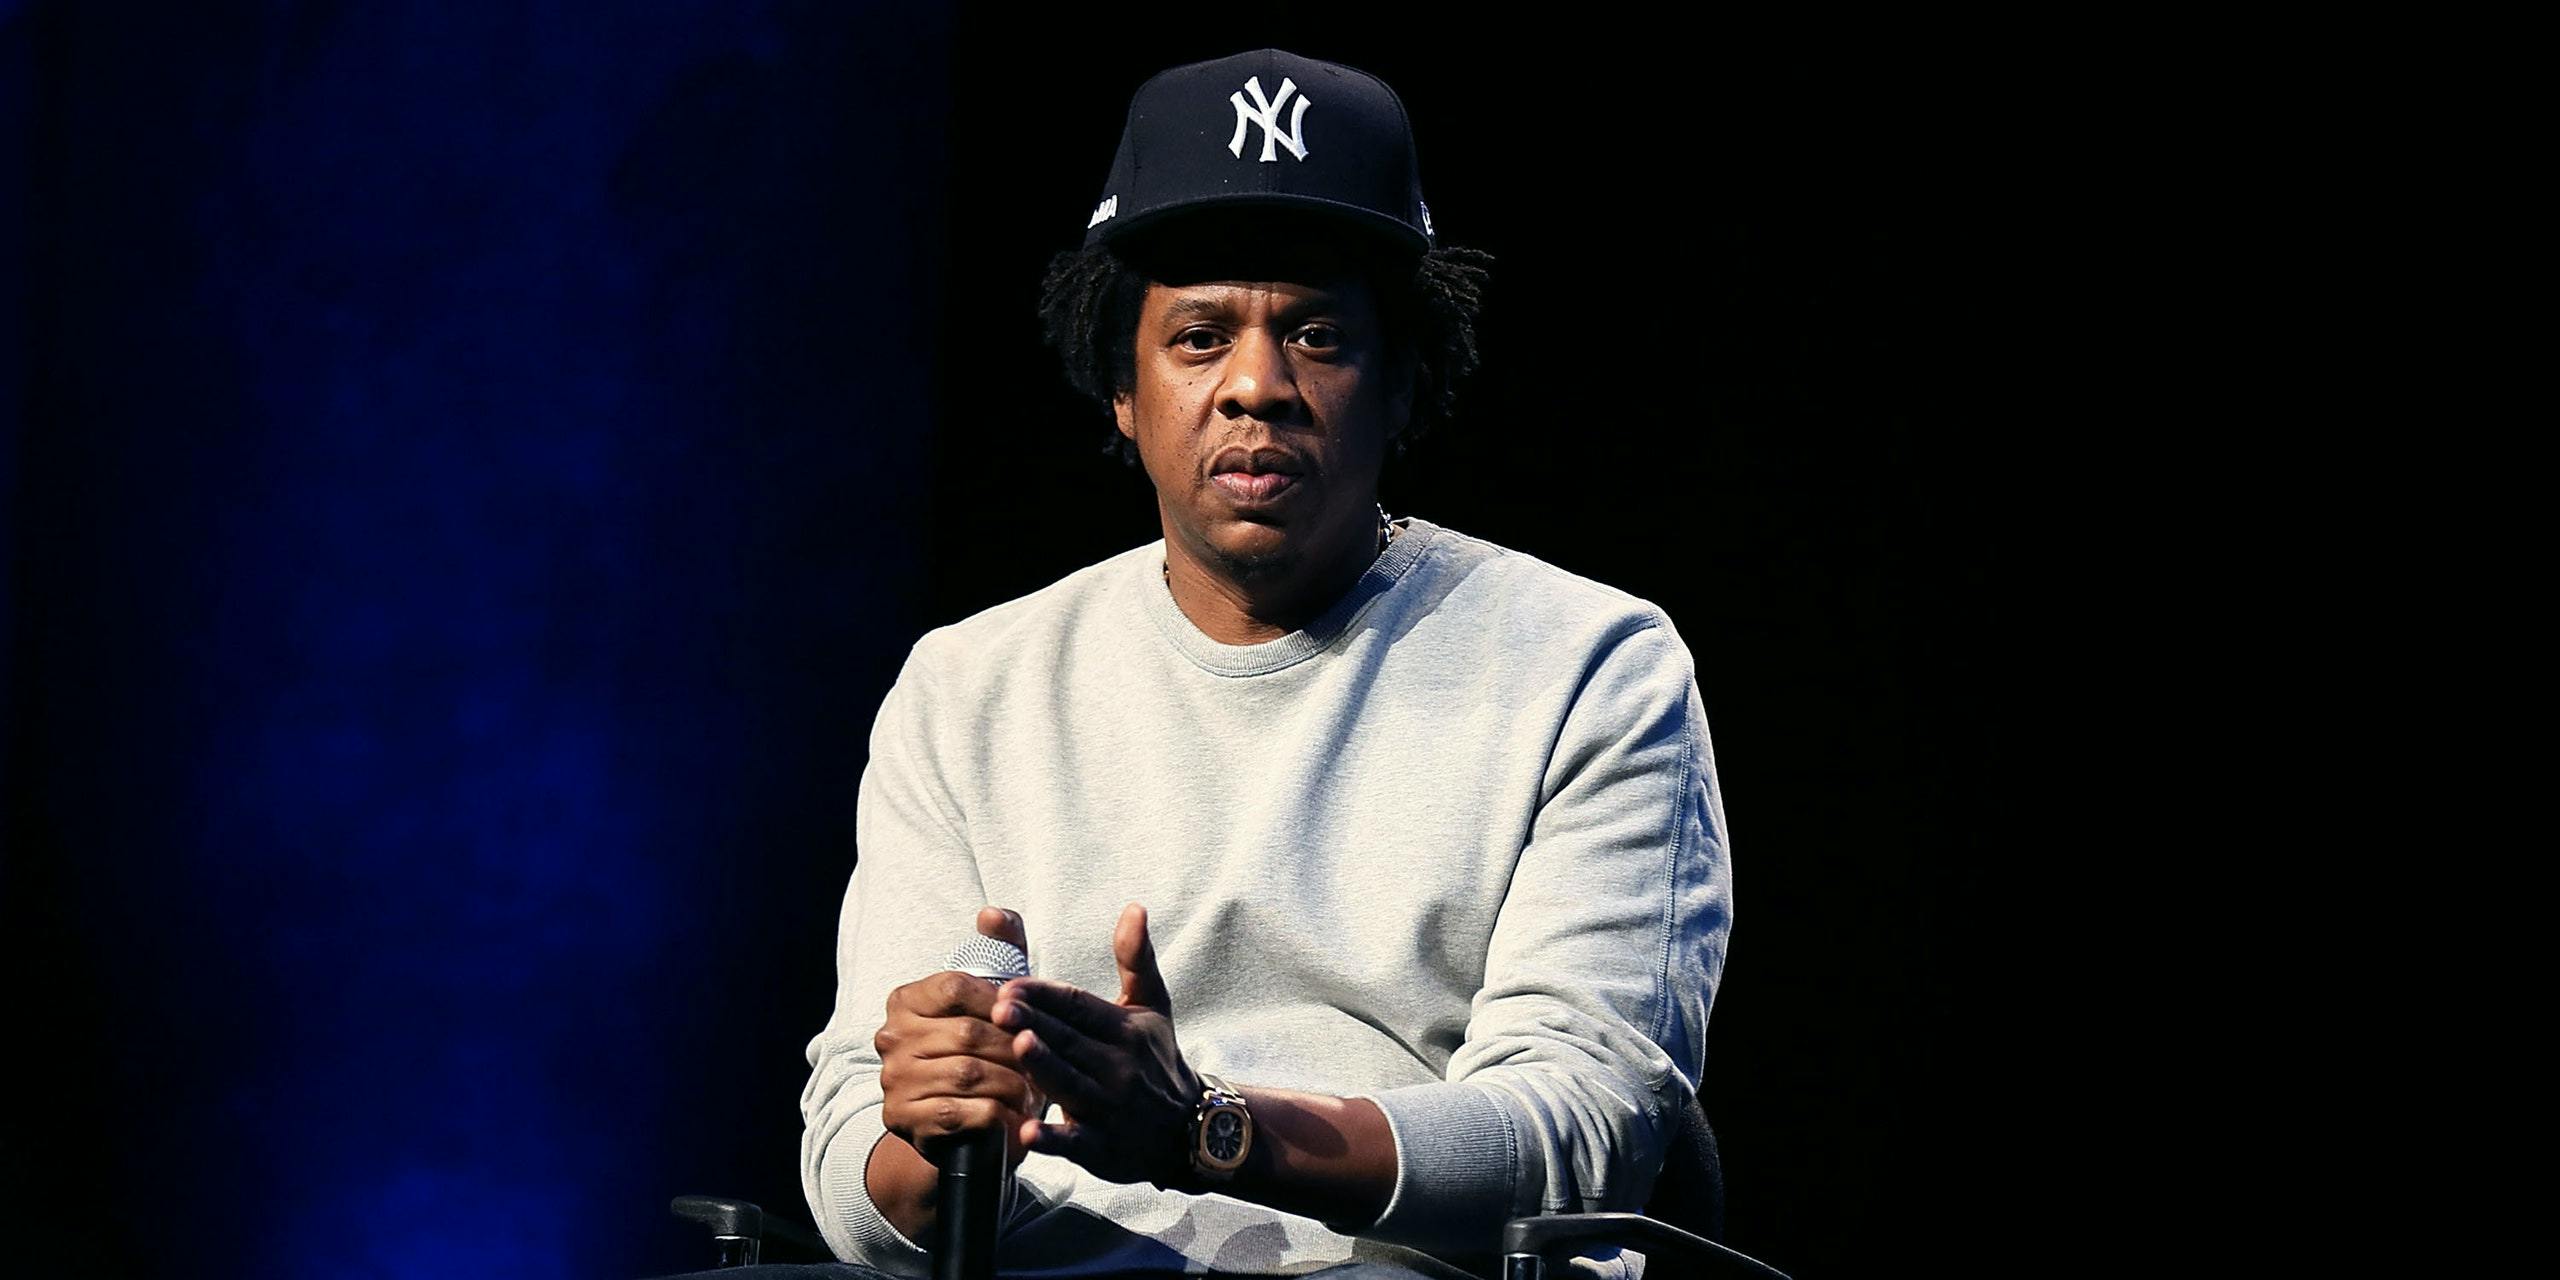 Jay-Z wearing a New York Yankees cap